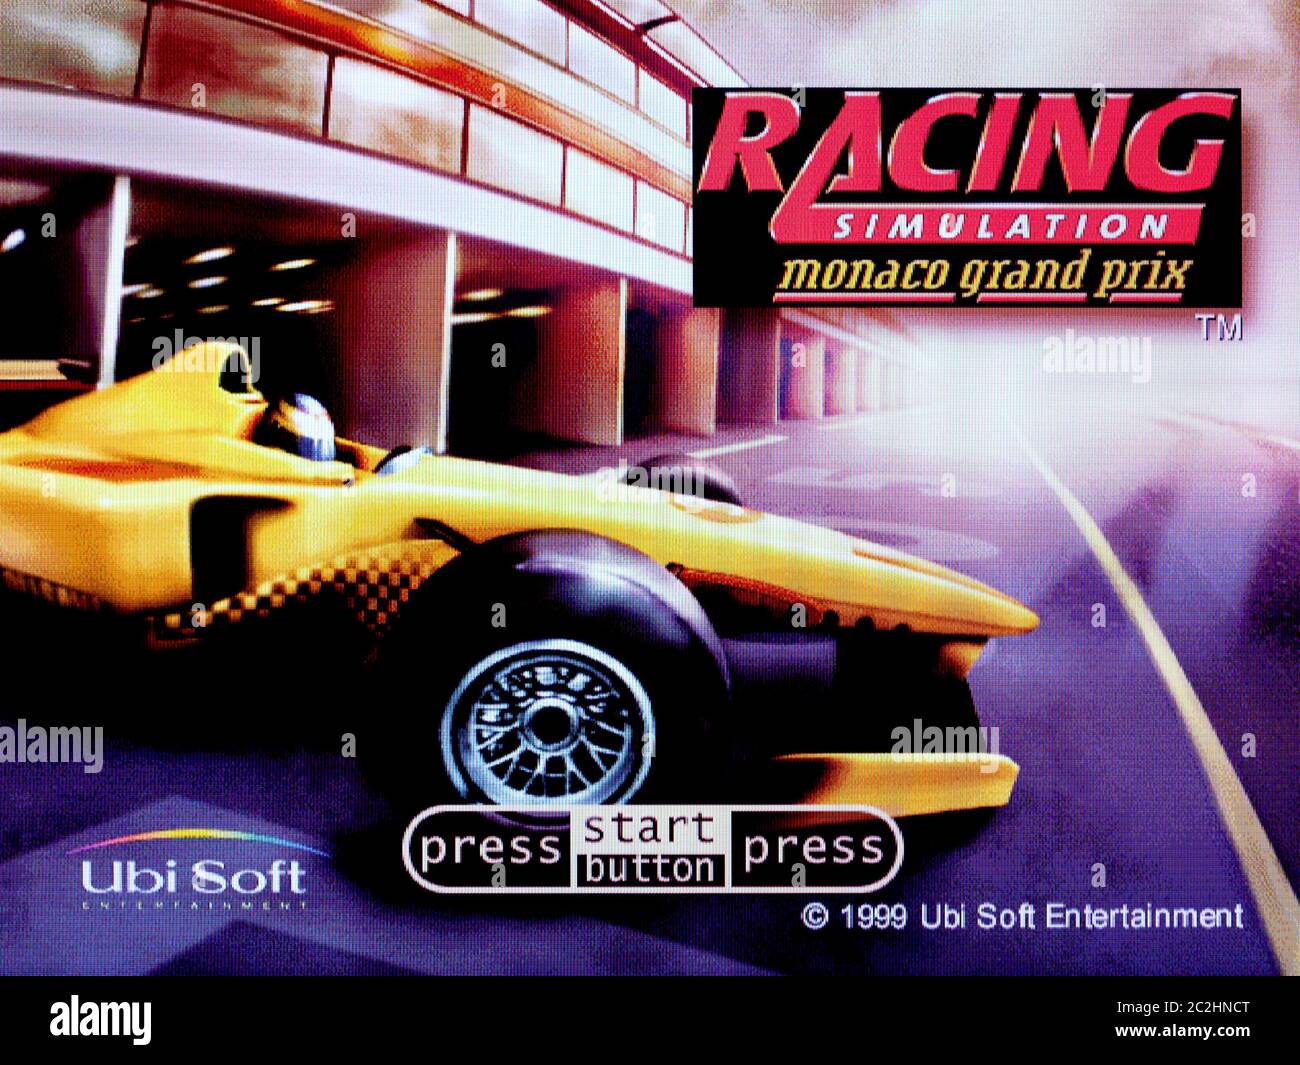 Monaco Grand Prix Racing Simulation - Sega Dreamcast Videogame - Editorial use only Stock Photo